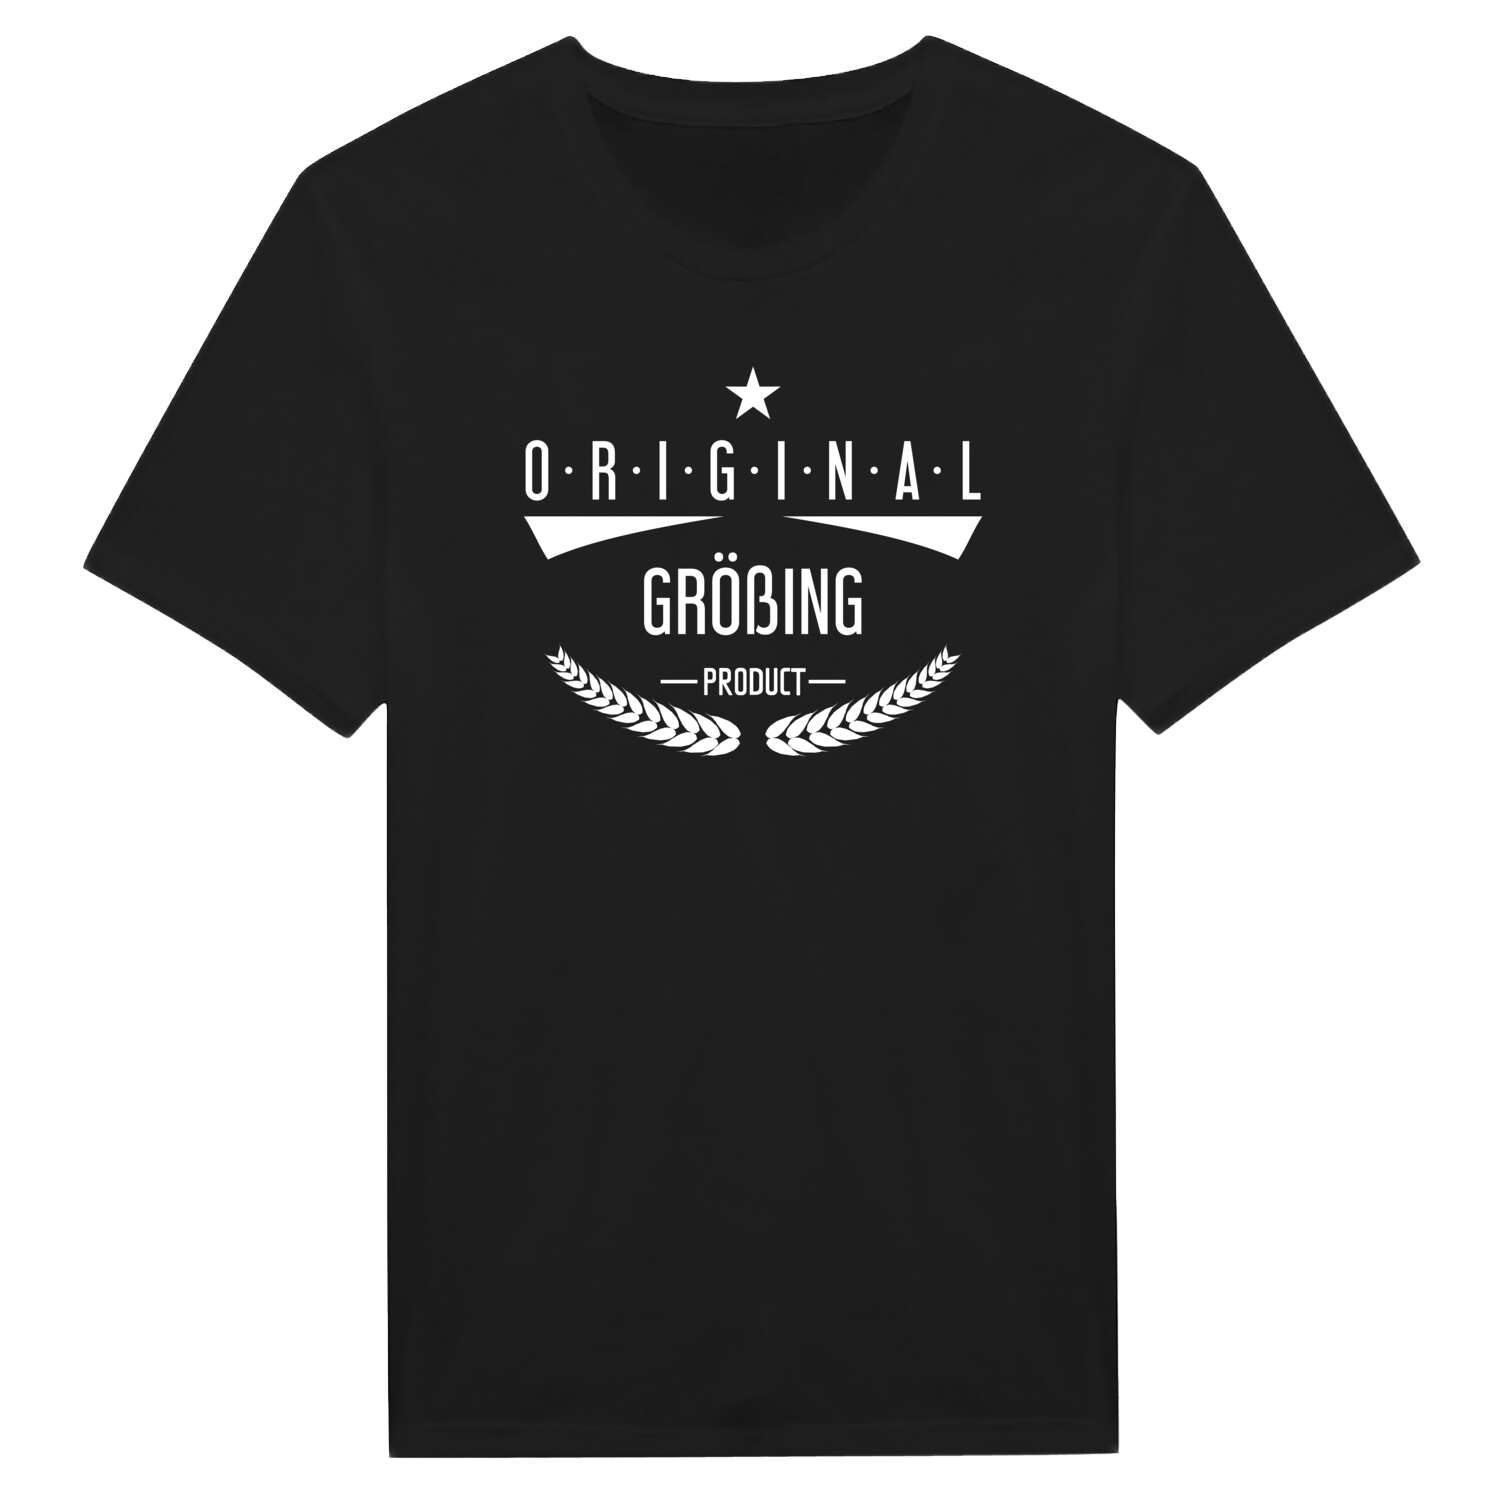 Größing T-Shirt »Original Product«